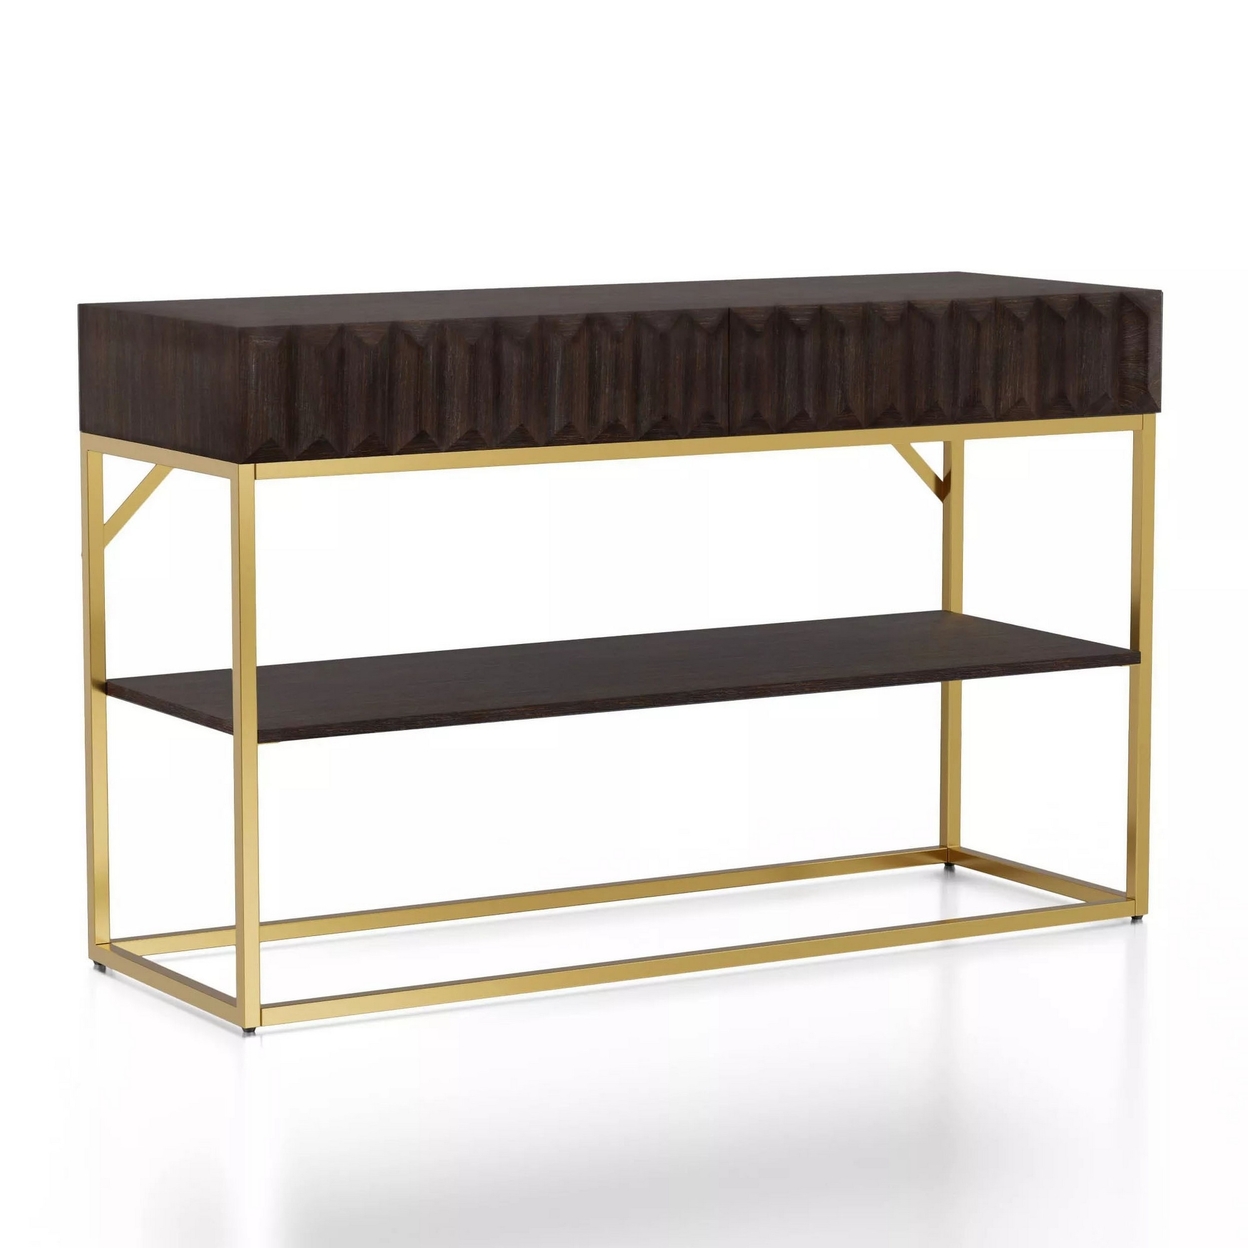 Bran 48 Inch Sofa Console Table, Brown Wood, Gold Steel Base, 2 Drawers- Saltoro Sherpi